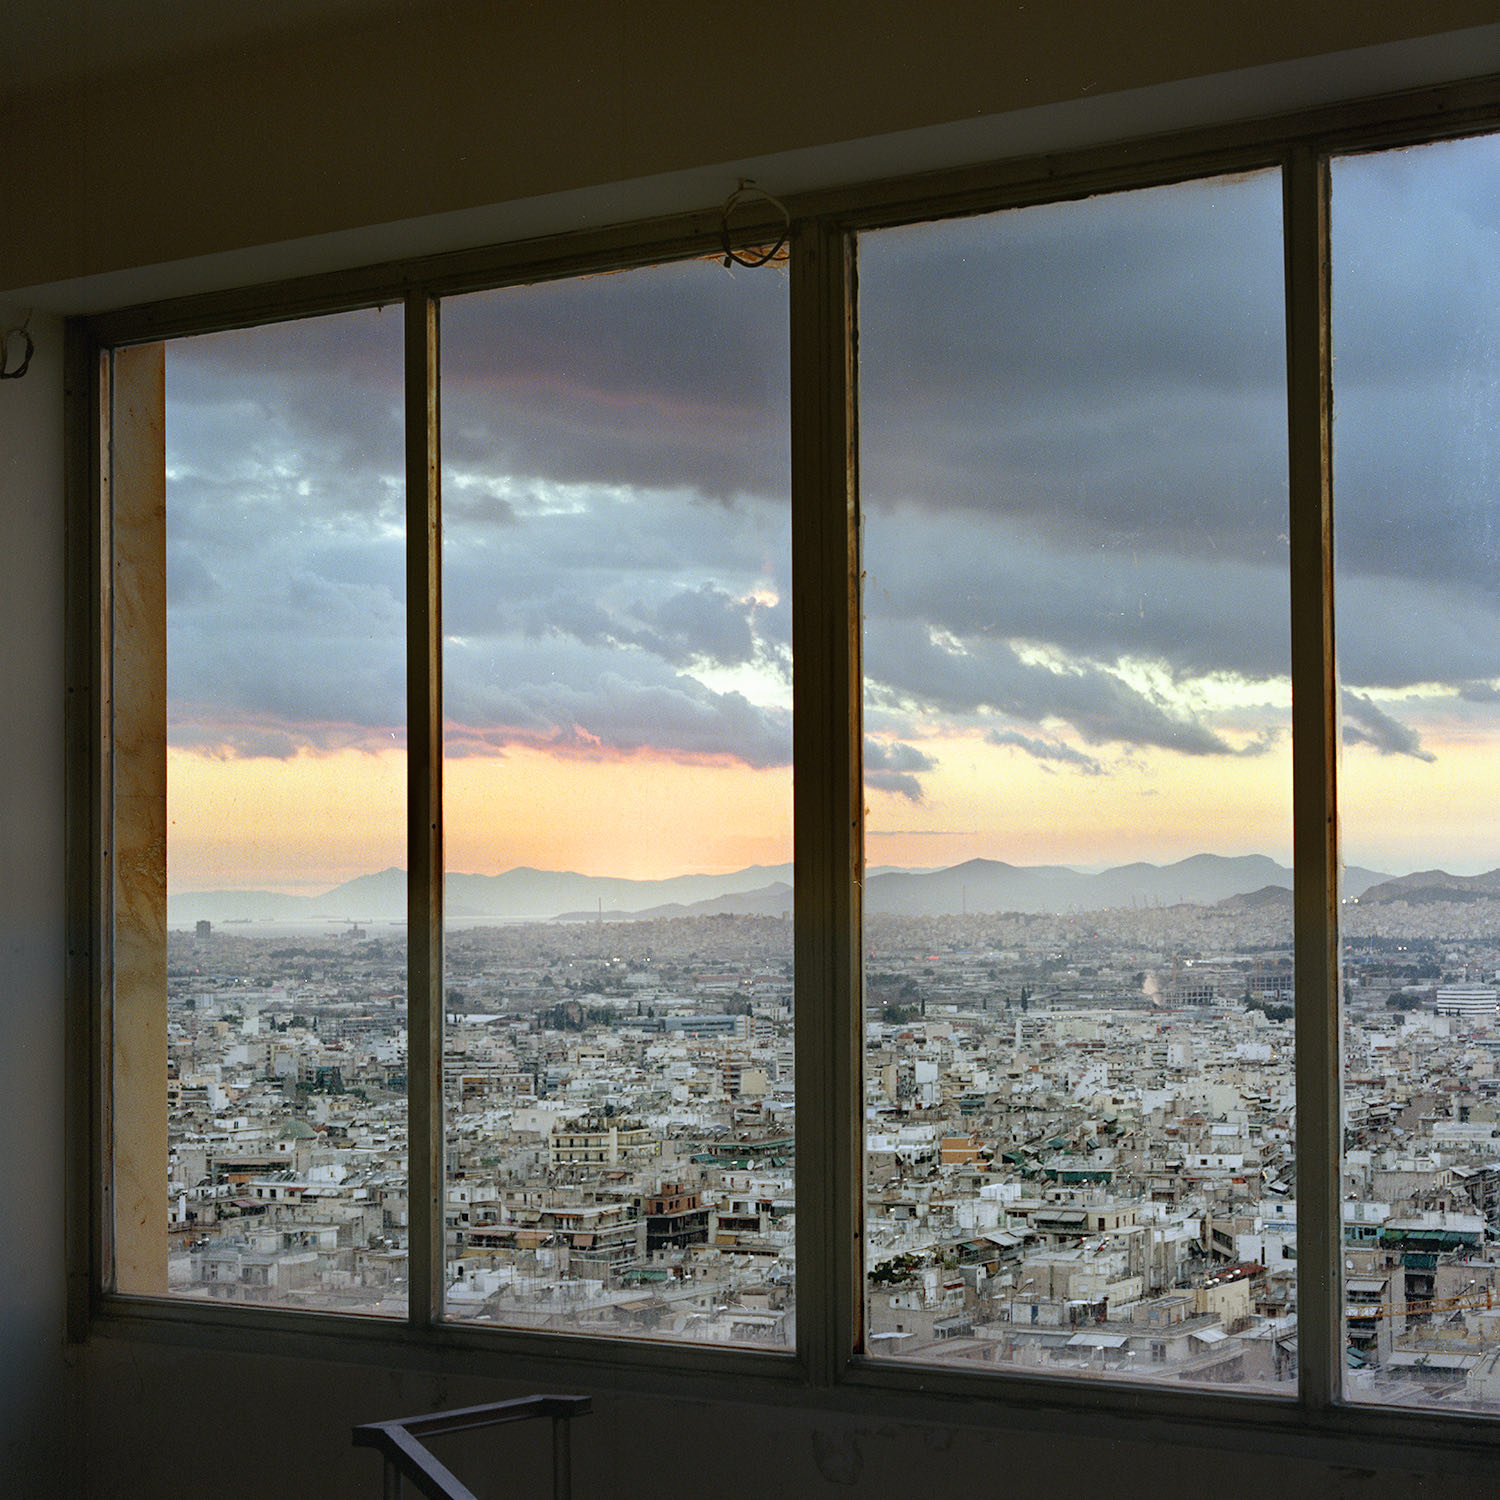 14. Athens through a window iFocus